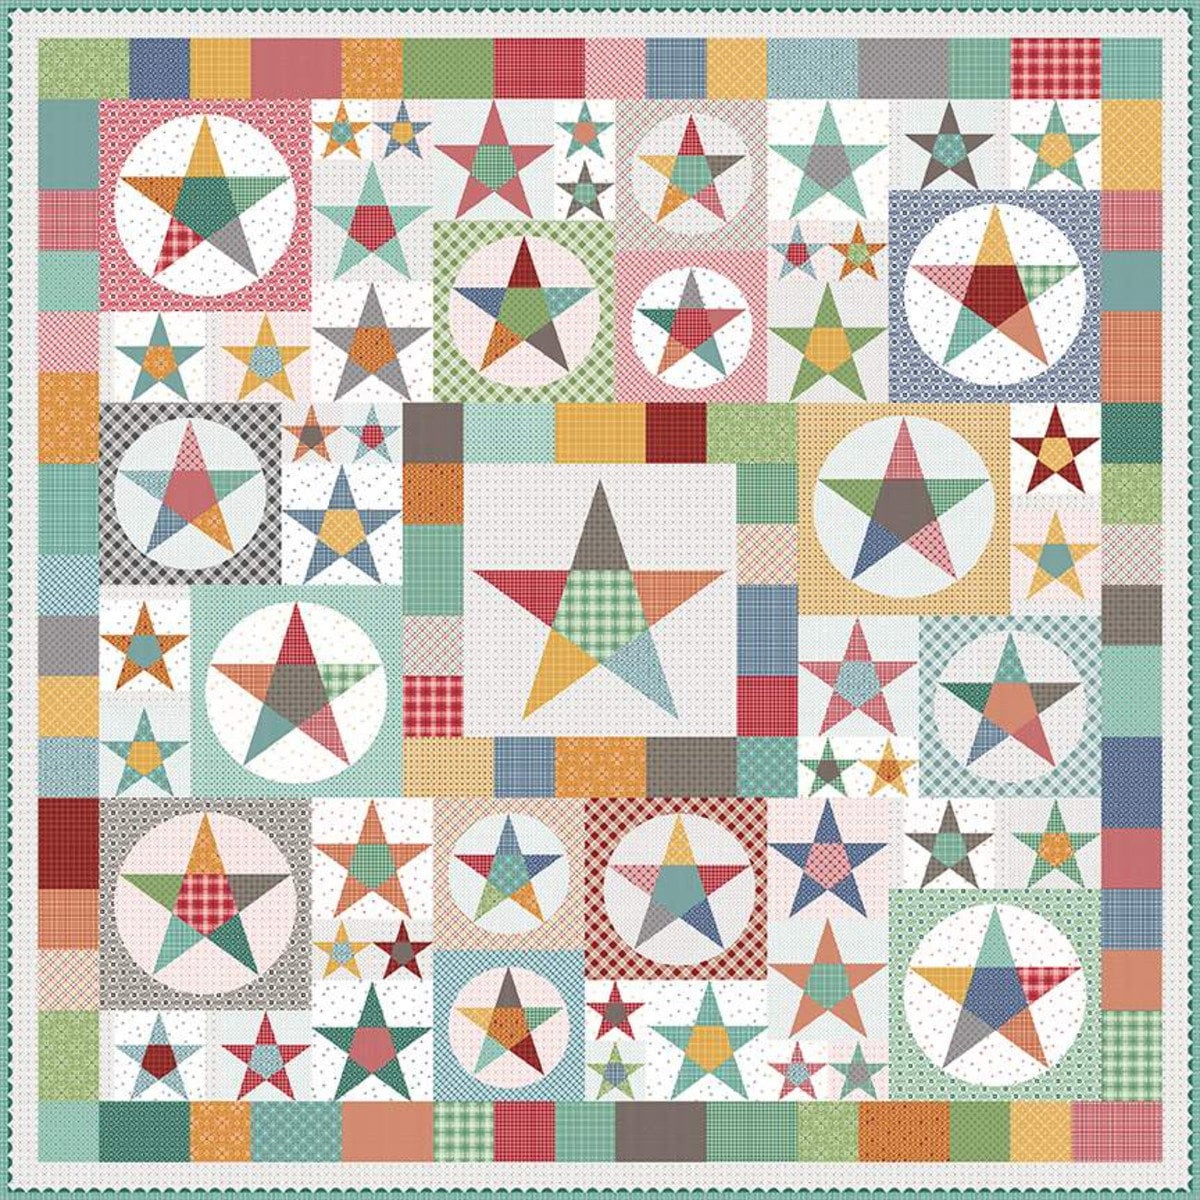 Farmhouse Star Quilt Pattern - Lori Holt P120-FARMHOUSESTAR, Fat Quarter Friendly Star Quilt Pattern